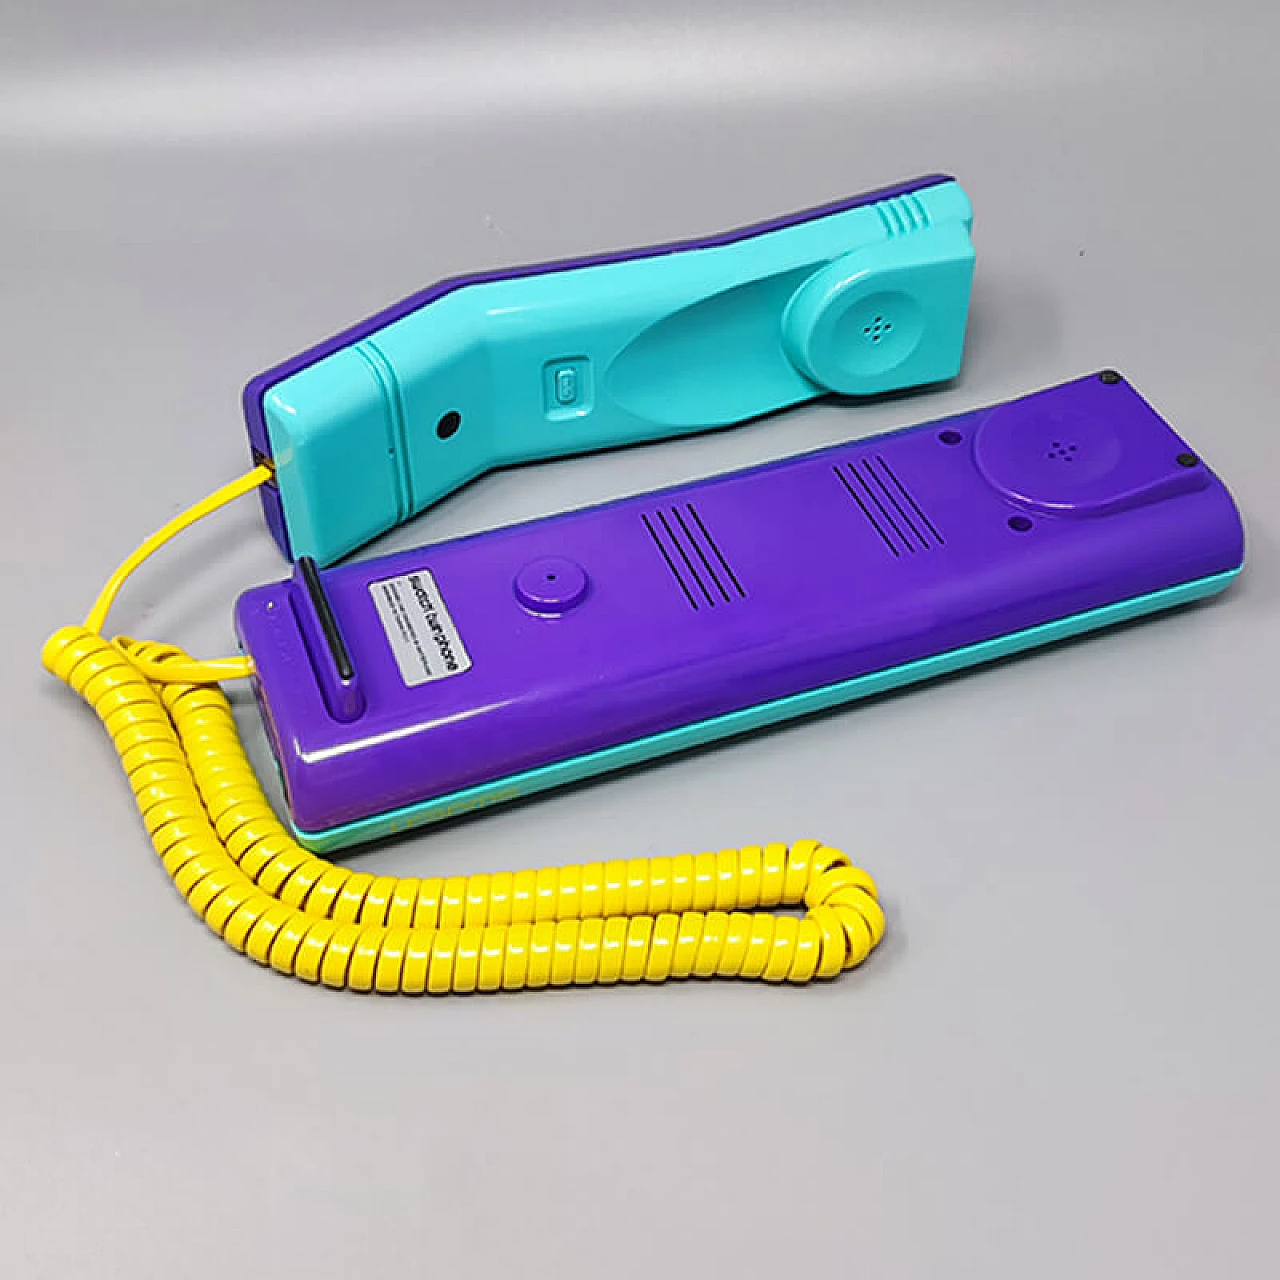 Puzzle Swatch Twin Phone landline phone, 1980s 7